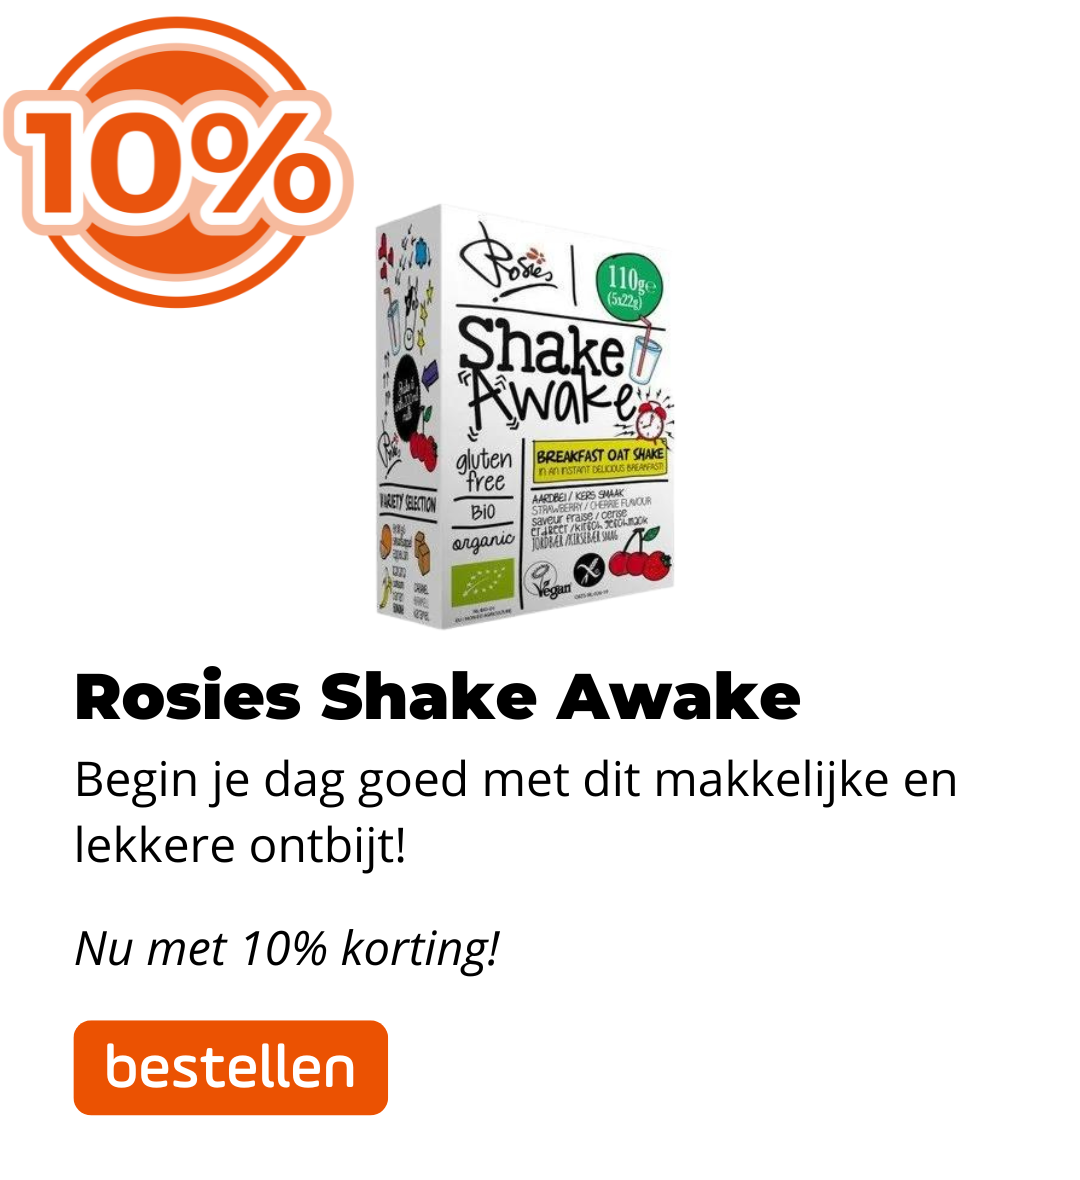 Rosies Shake Awake 10% korting